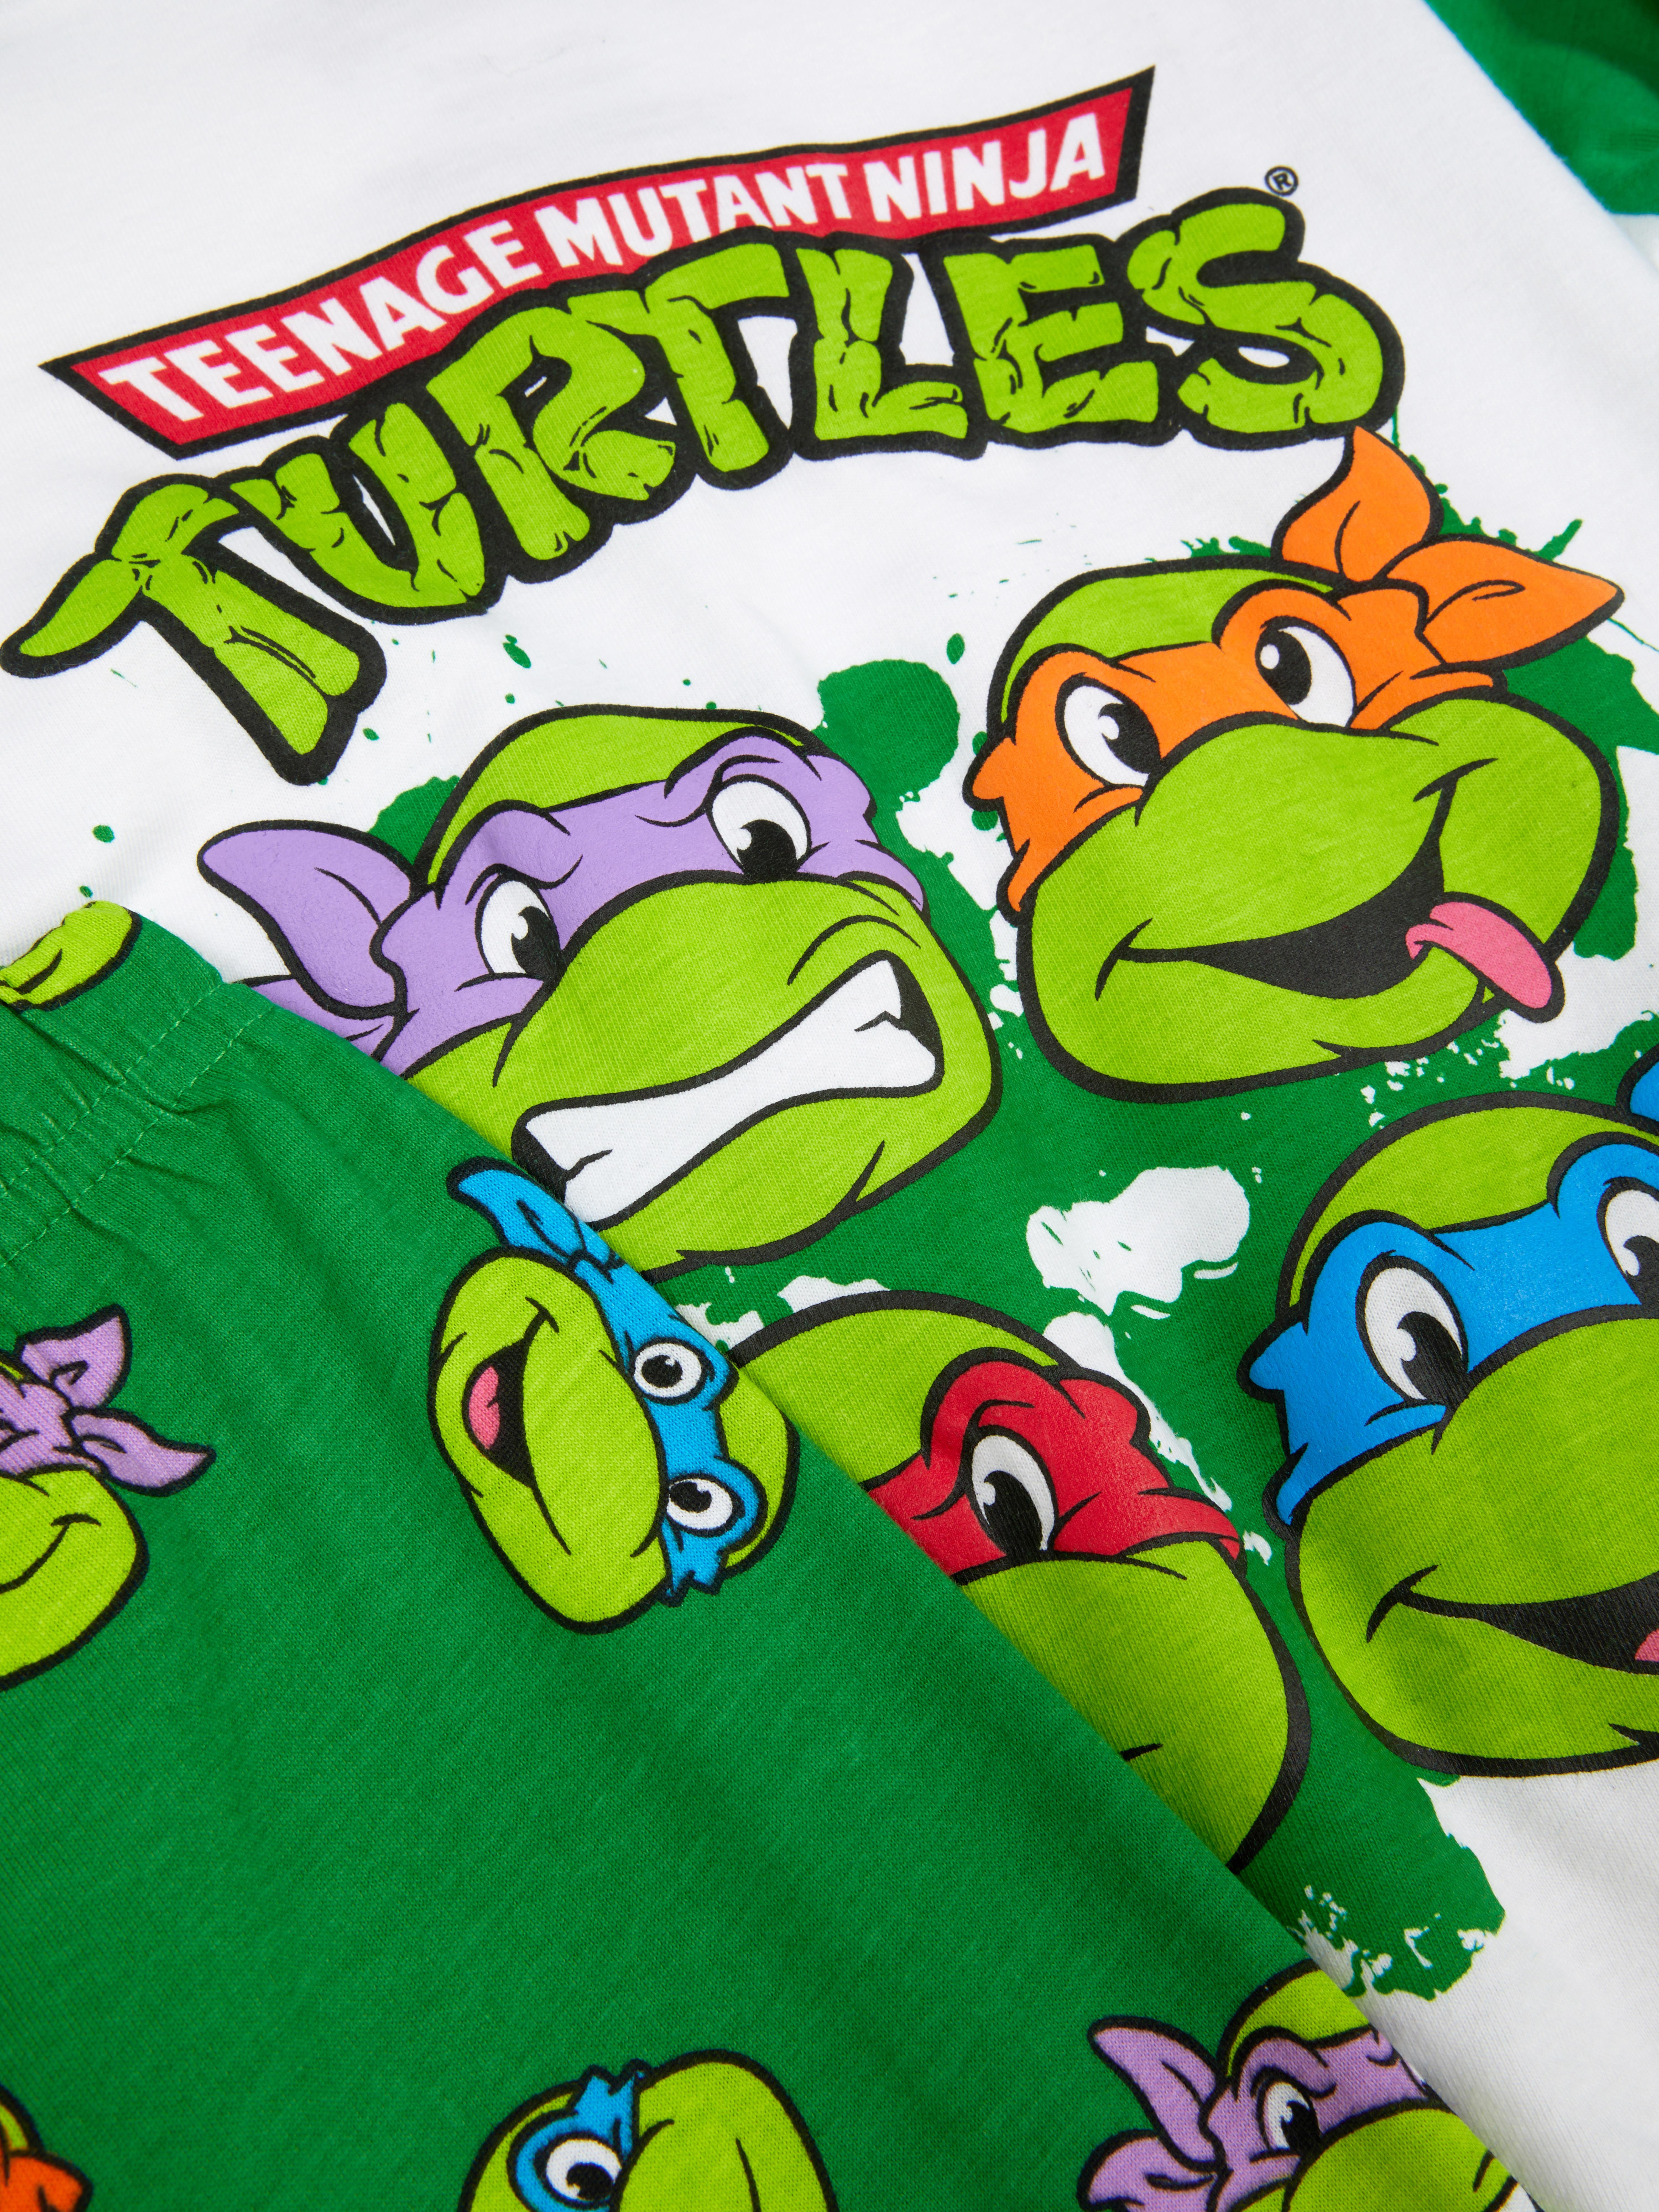 Intimo Nickelodeon Boys' Teenage Mutant Ninja Turtles TMNT Kids Pajama  Pants () Green - ShopStyle